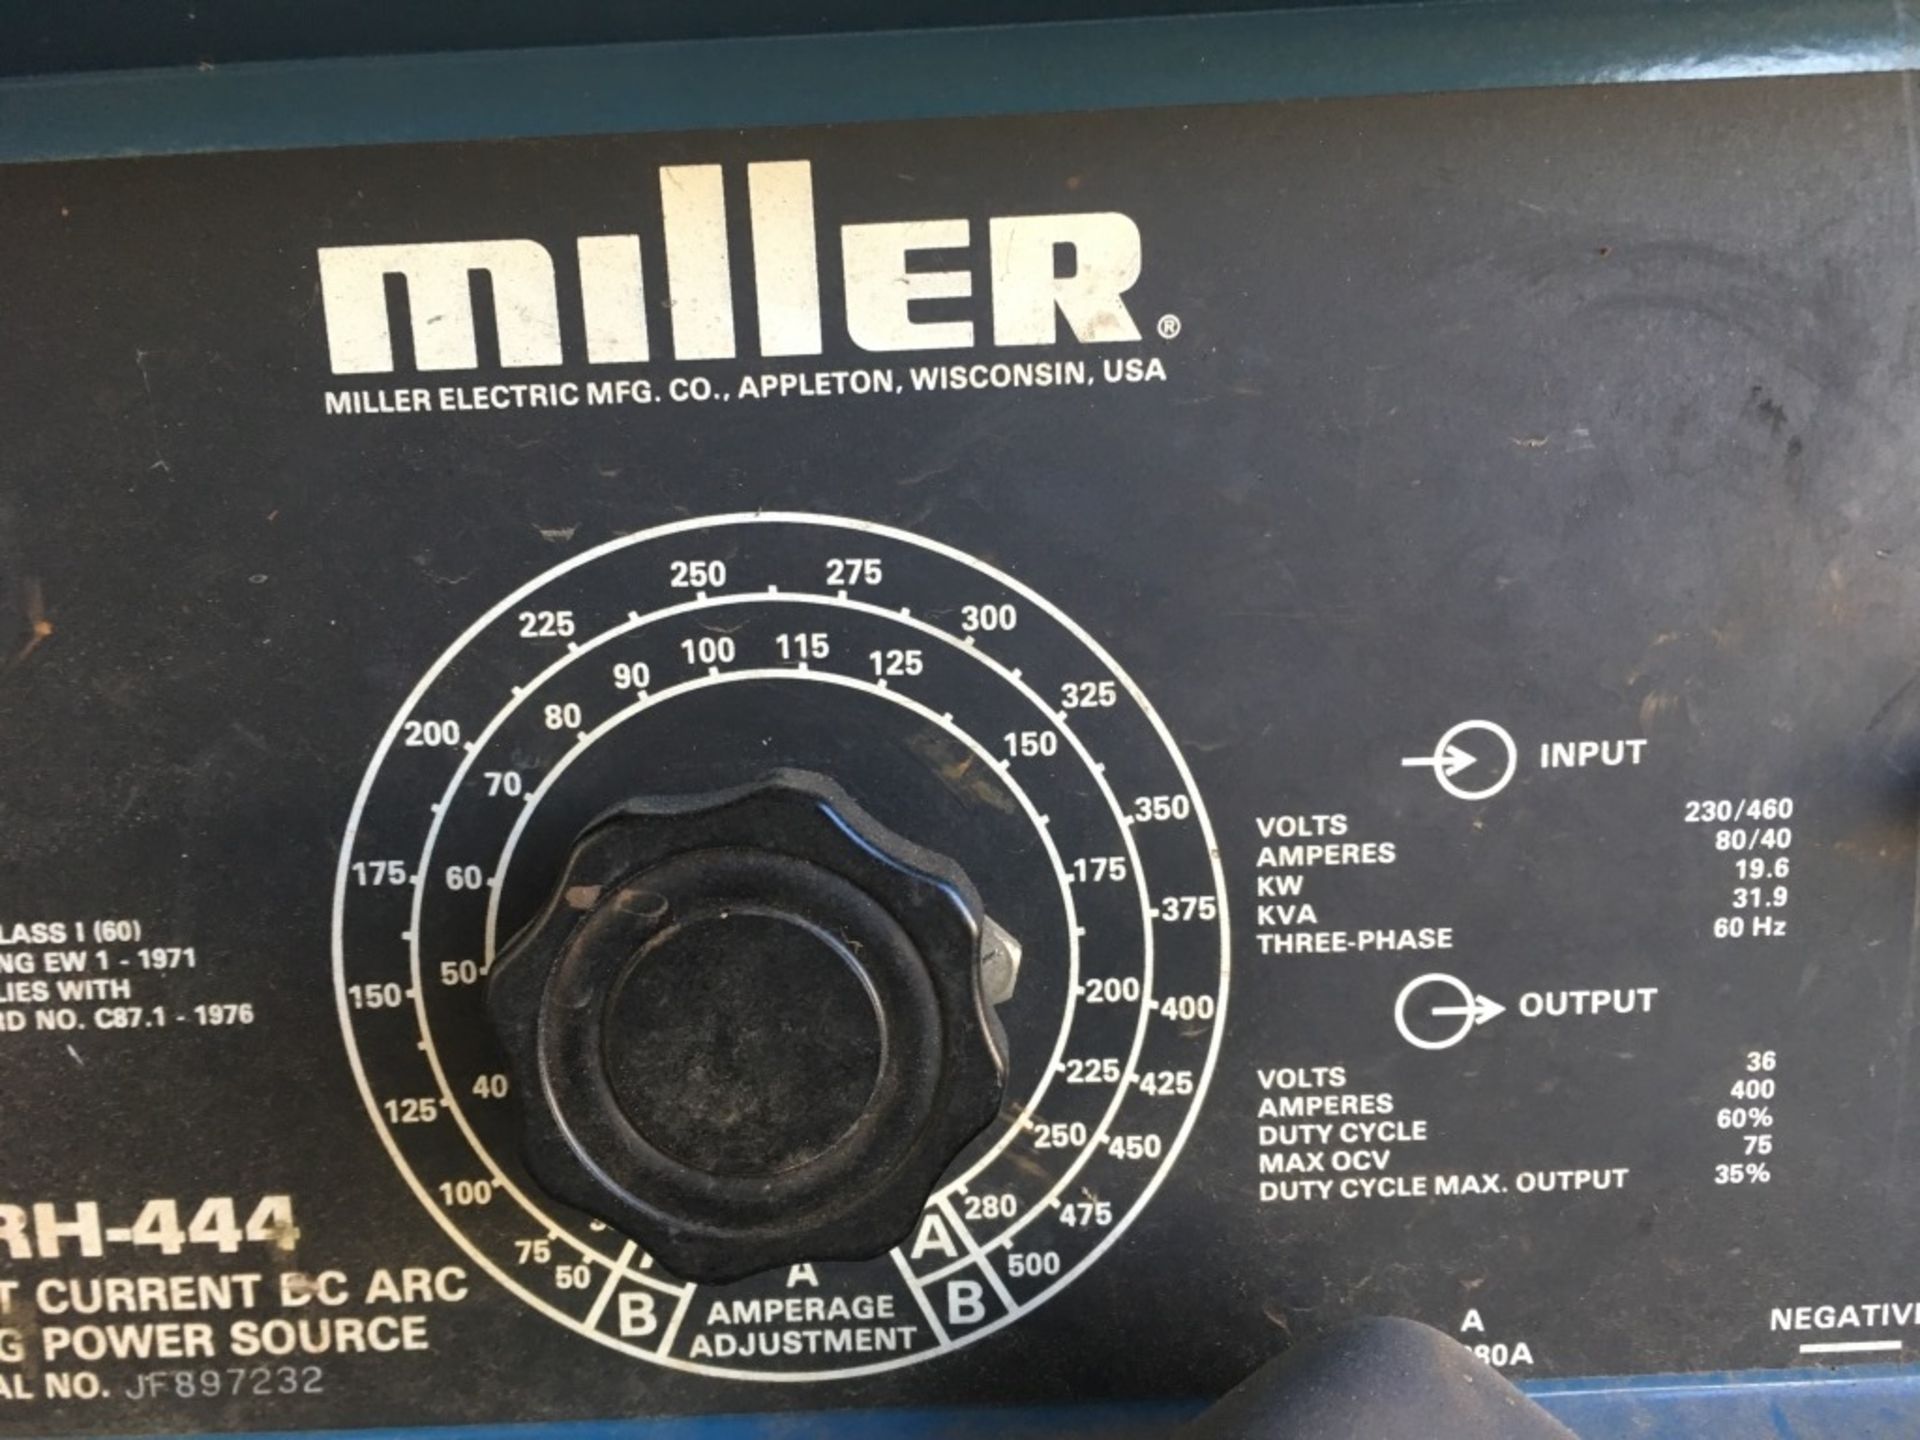 Miller SRH-444 Welder - Image 8 of 10